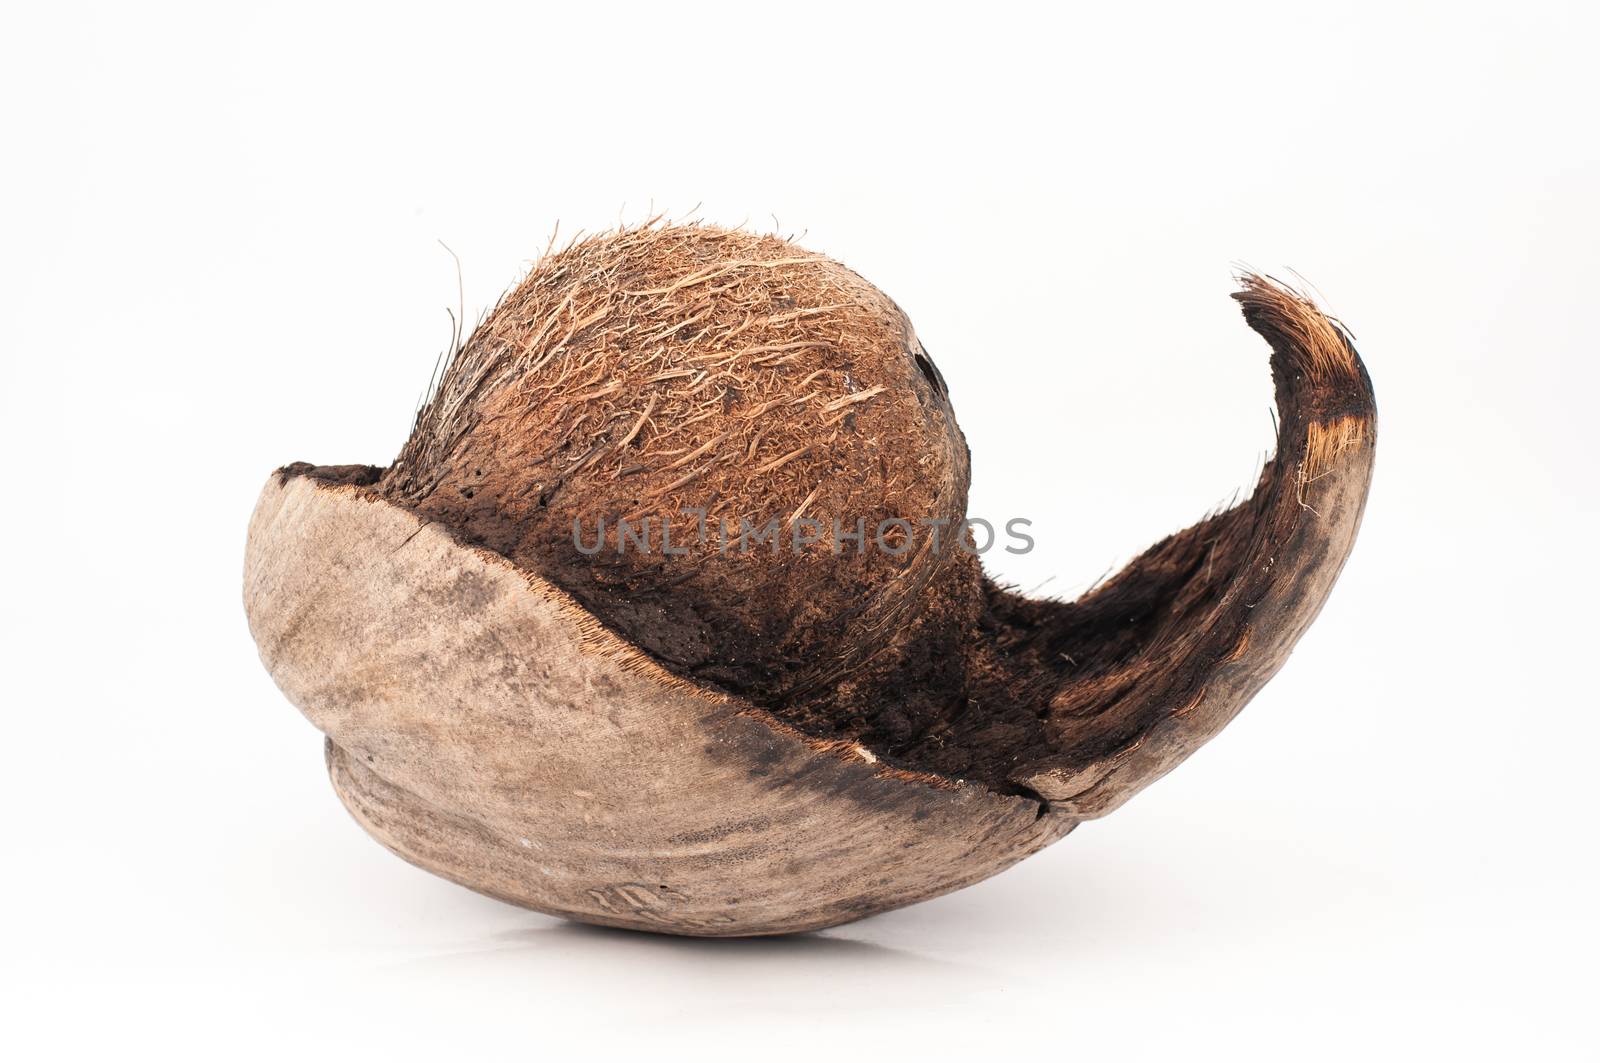 The exotic coconut by Sorapop